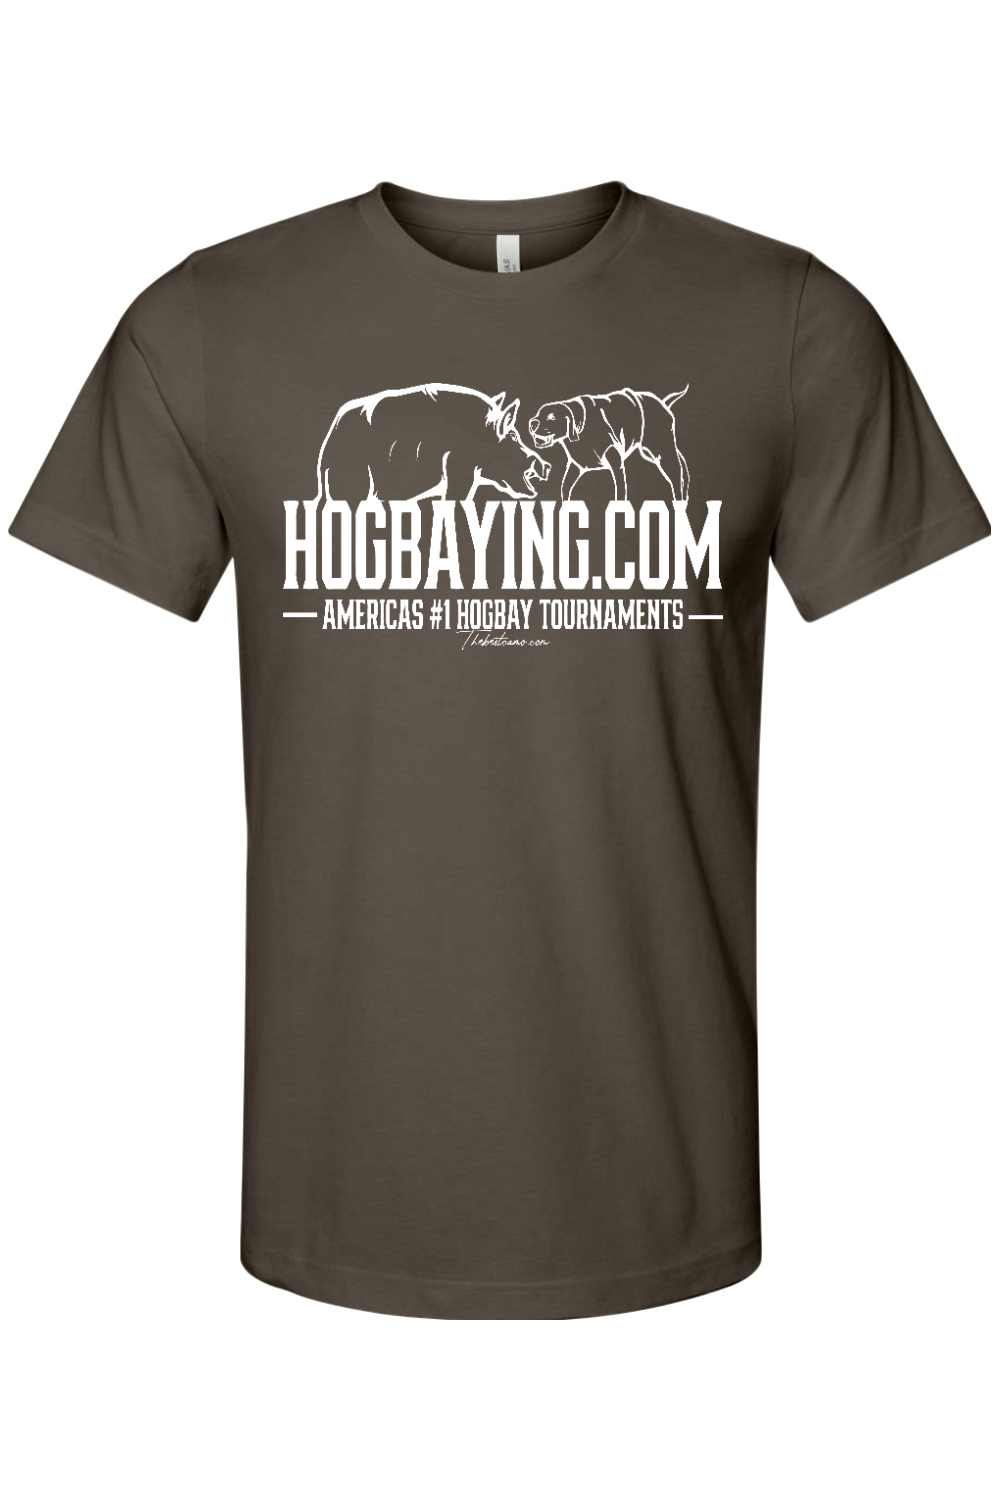 hogbaying.com front print